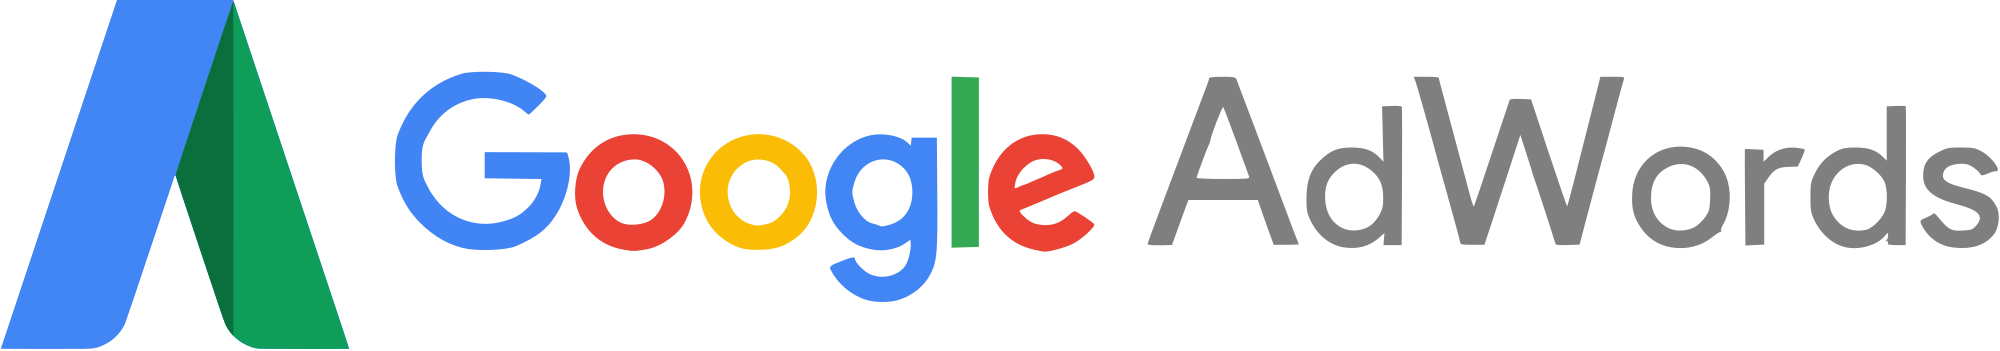 File:Logo-google-adwords.png